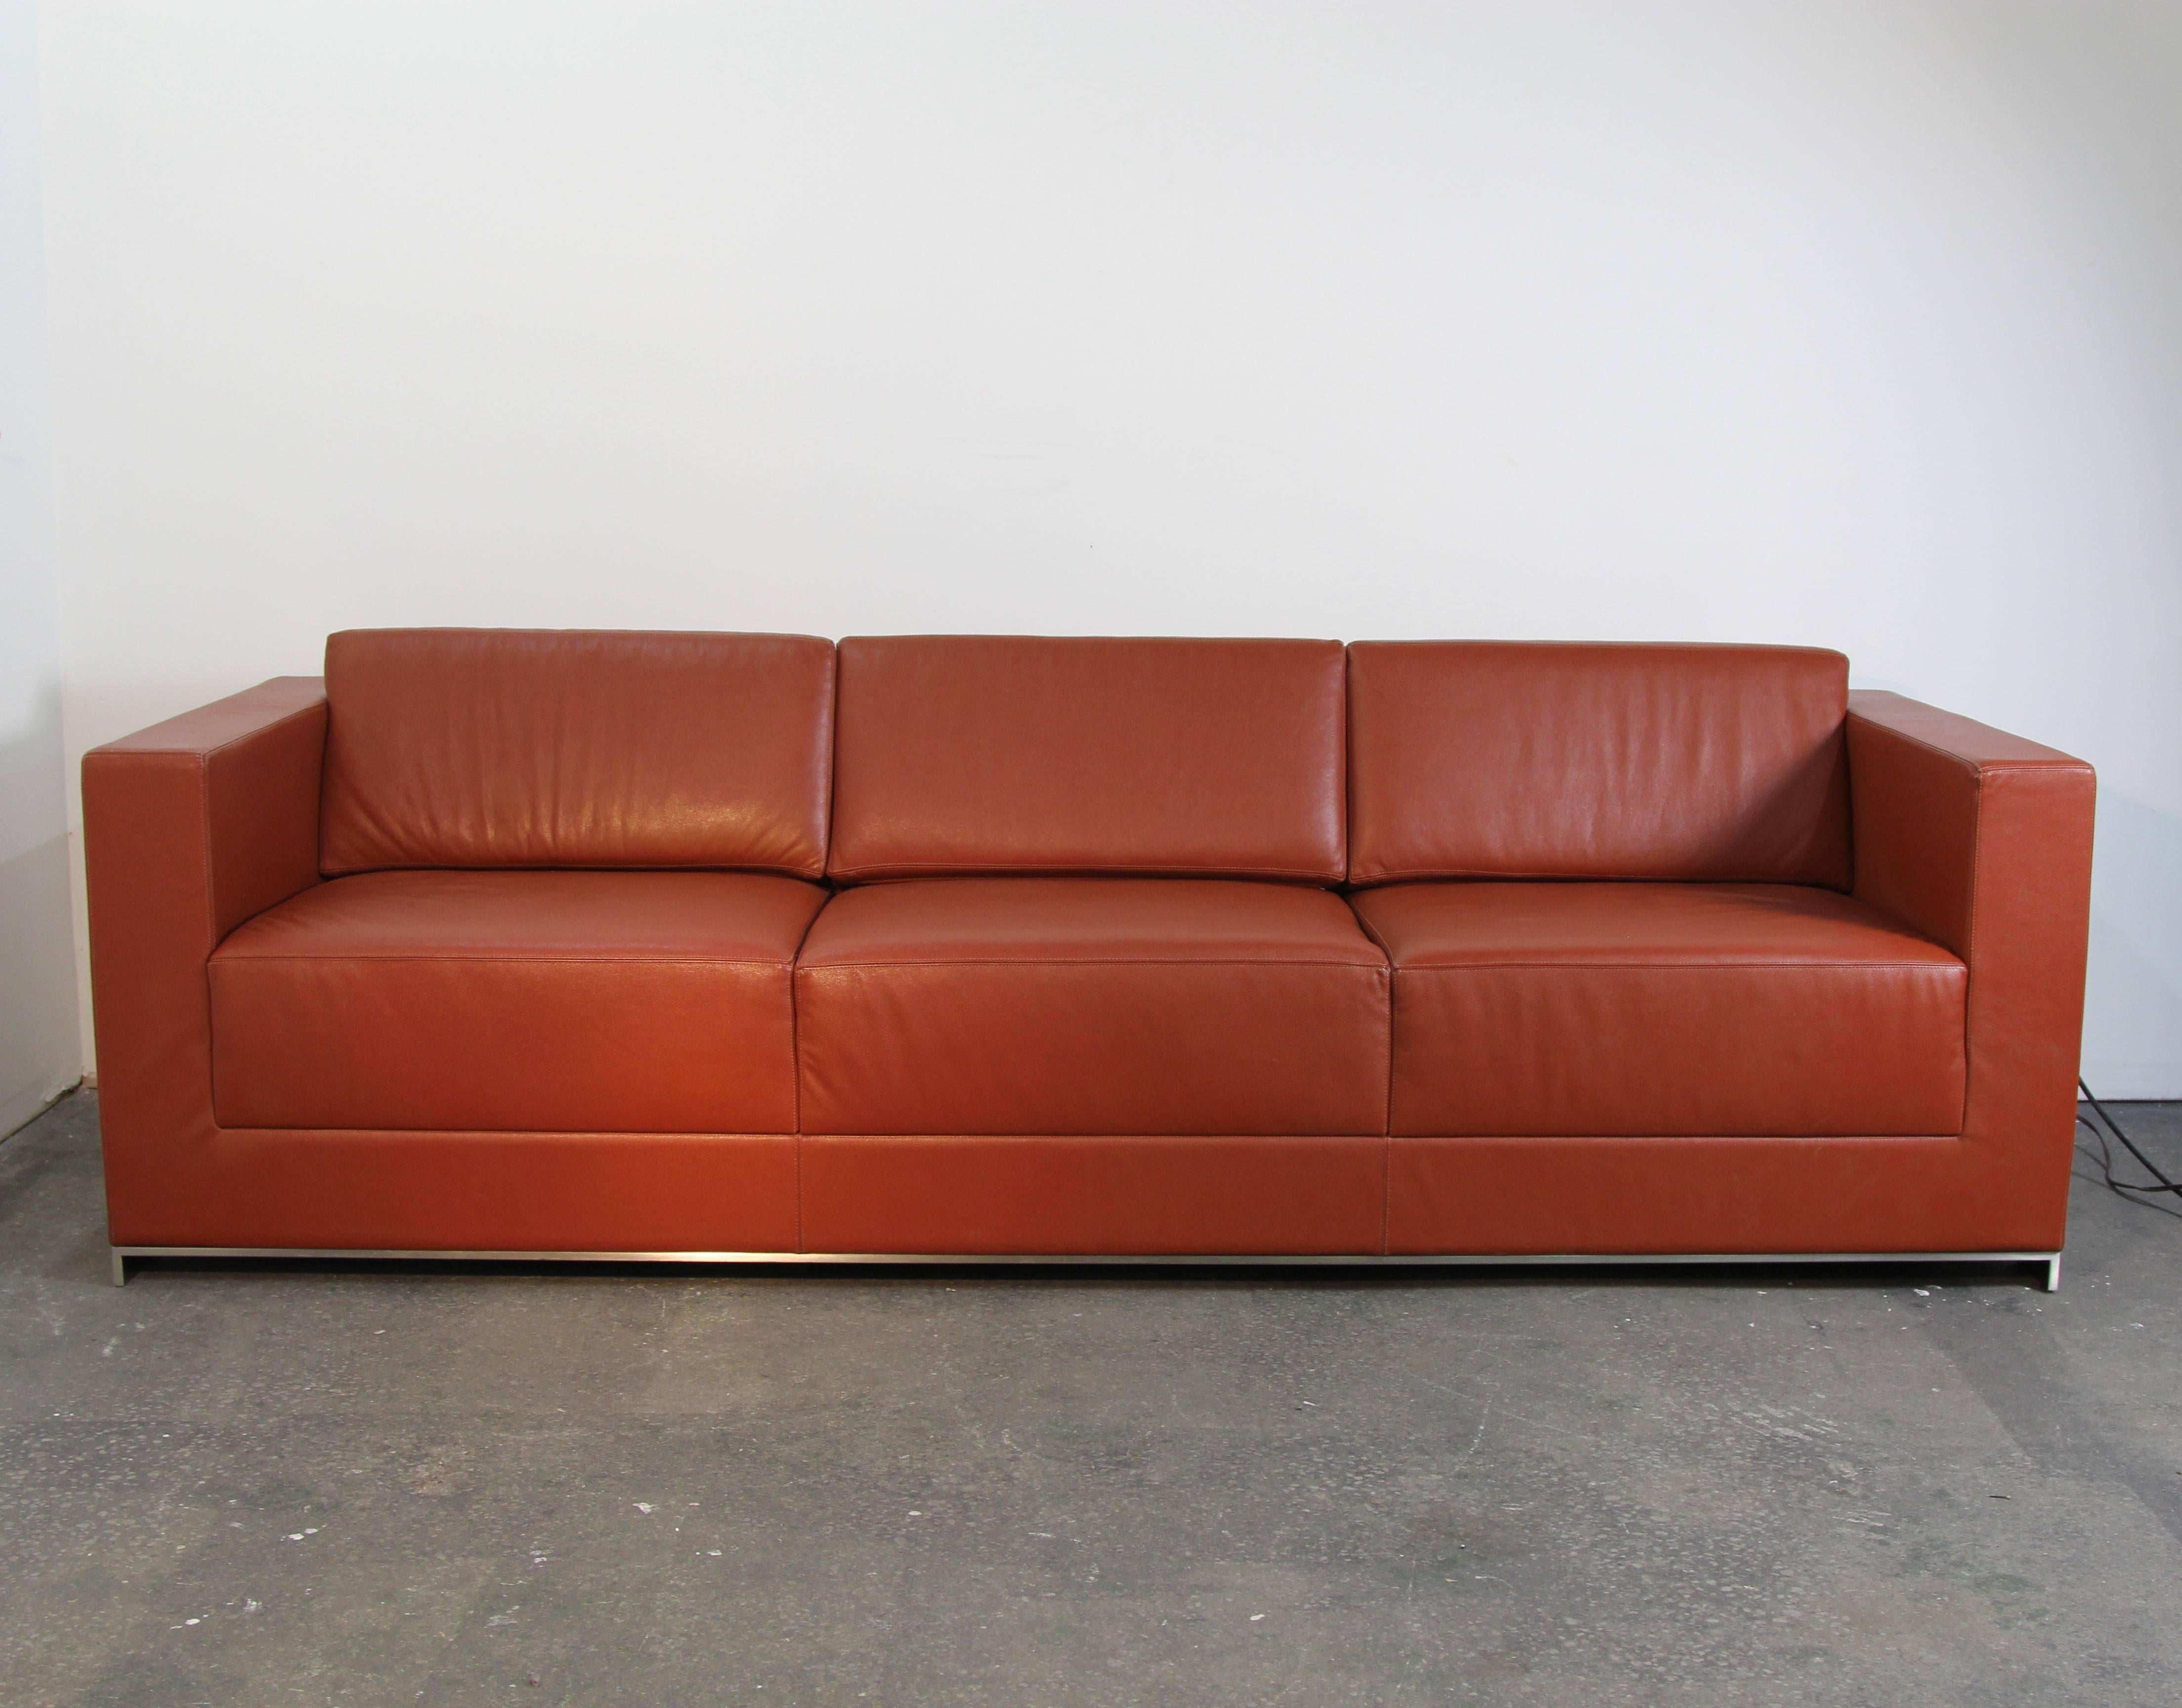 Bernhardt saddle leather three-seat sofa on brushed chrome frame. Modern, square arm leather sofa. On Brushed steel frame.